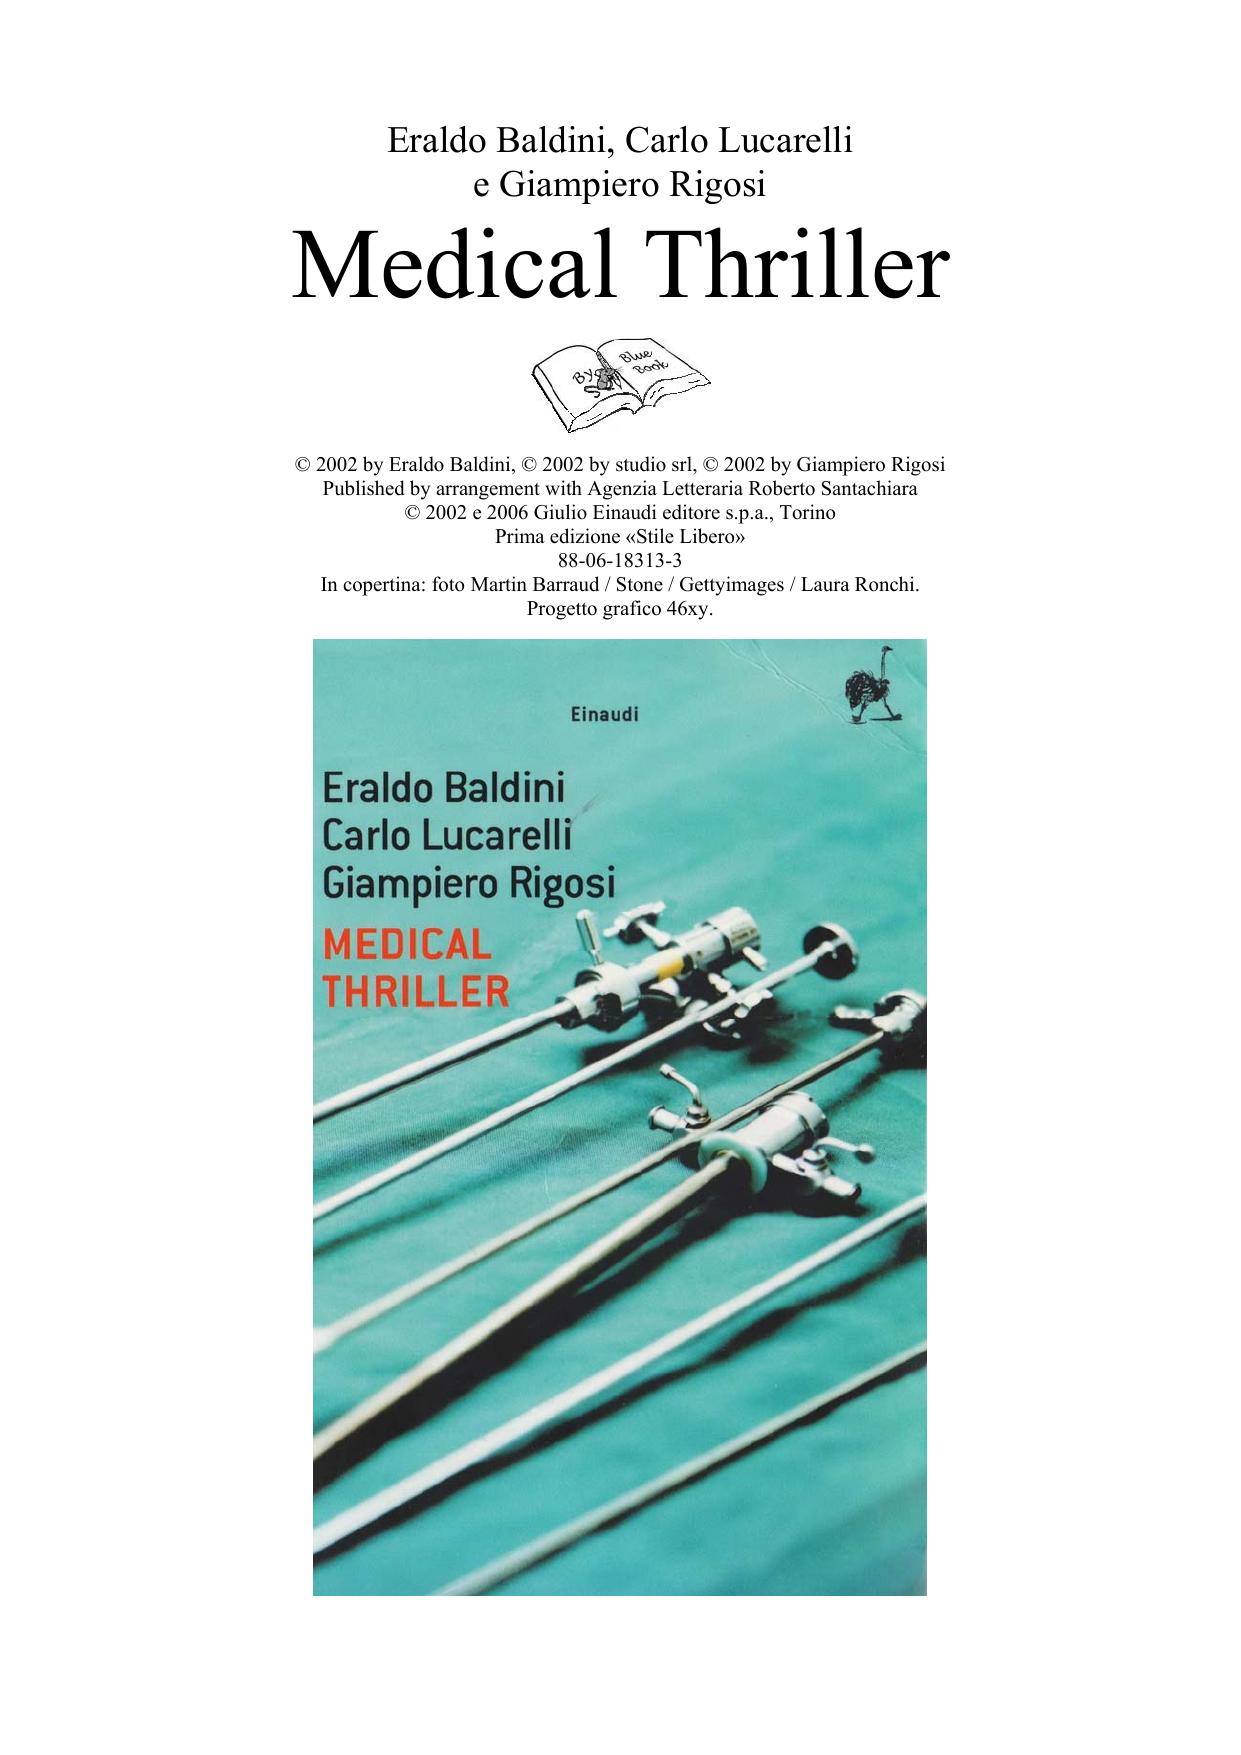 Medical Thriller by Bluebook